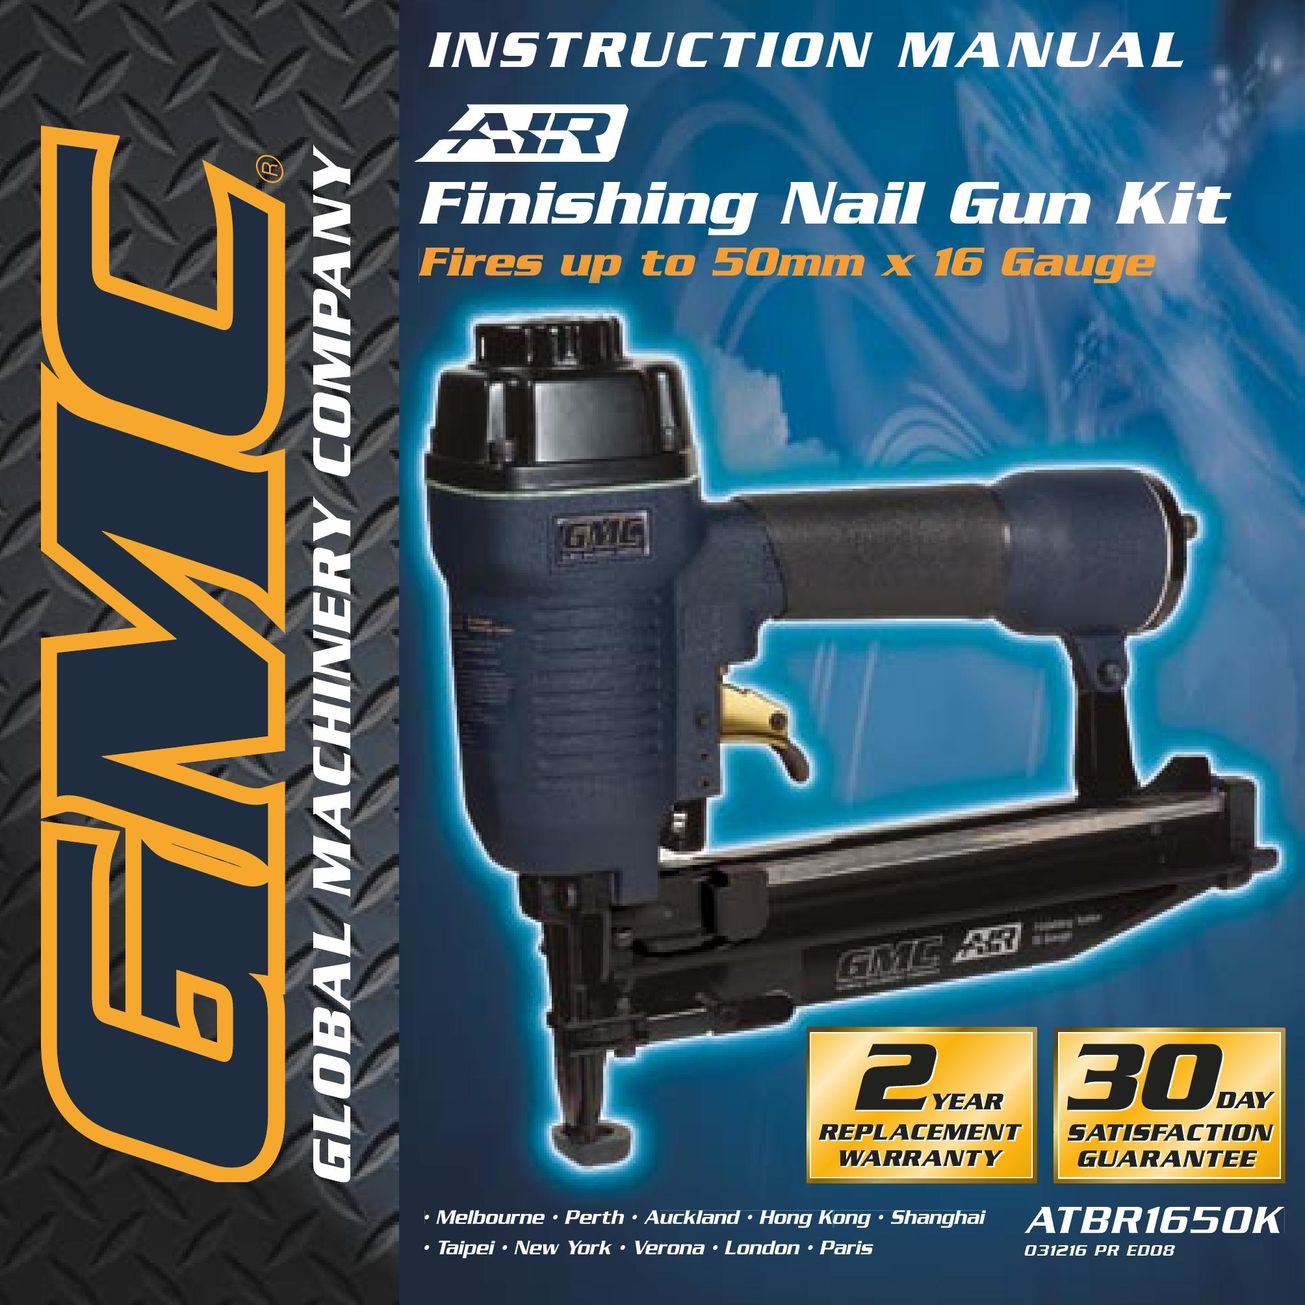 Global Machinery Company ATBR1650K Nail Gun User Manual